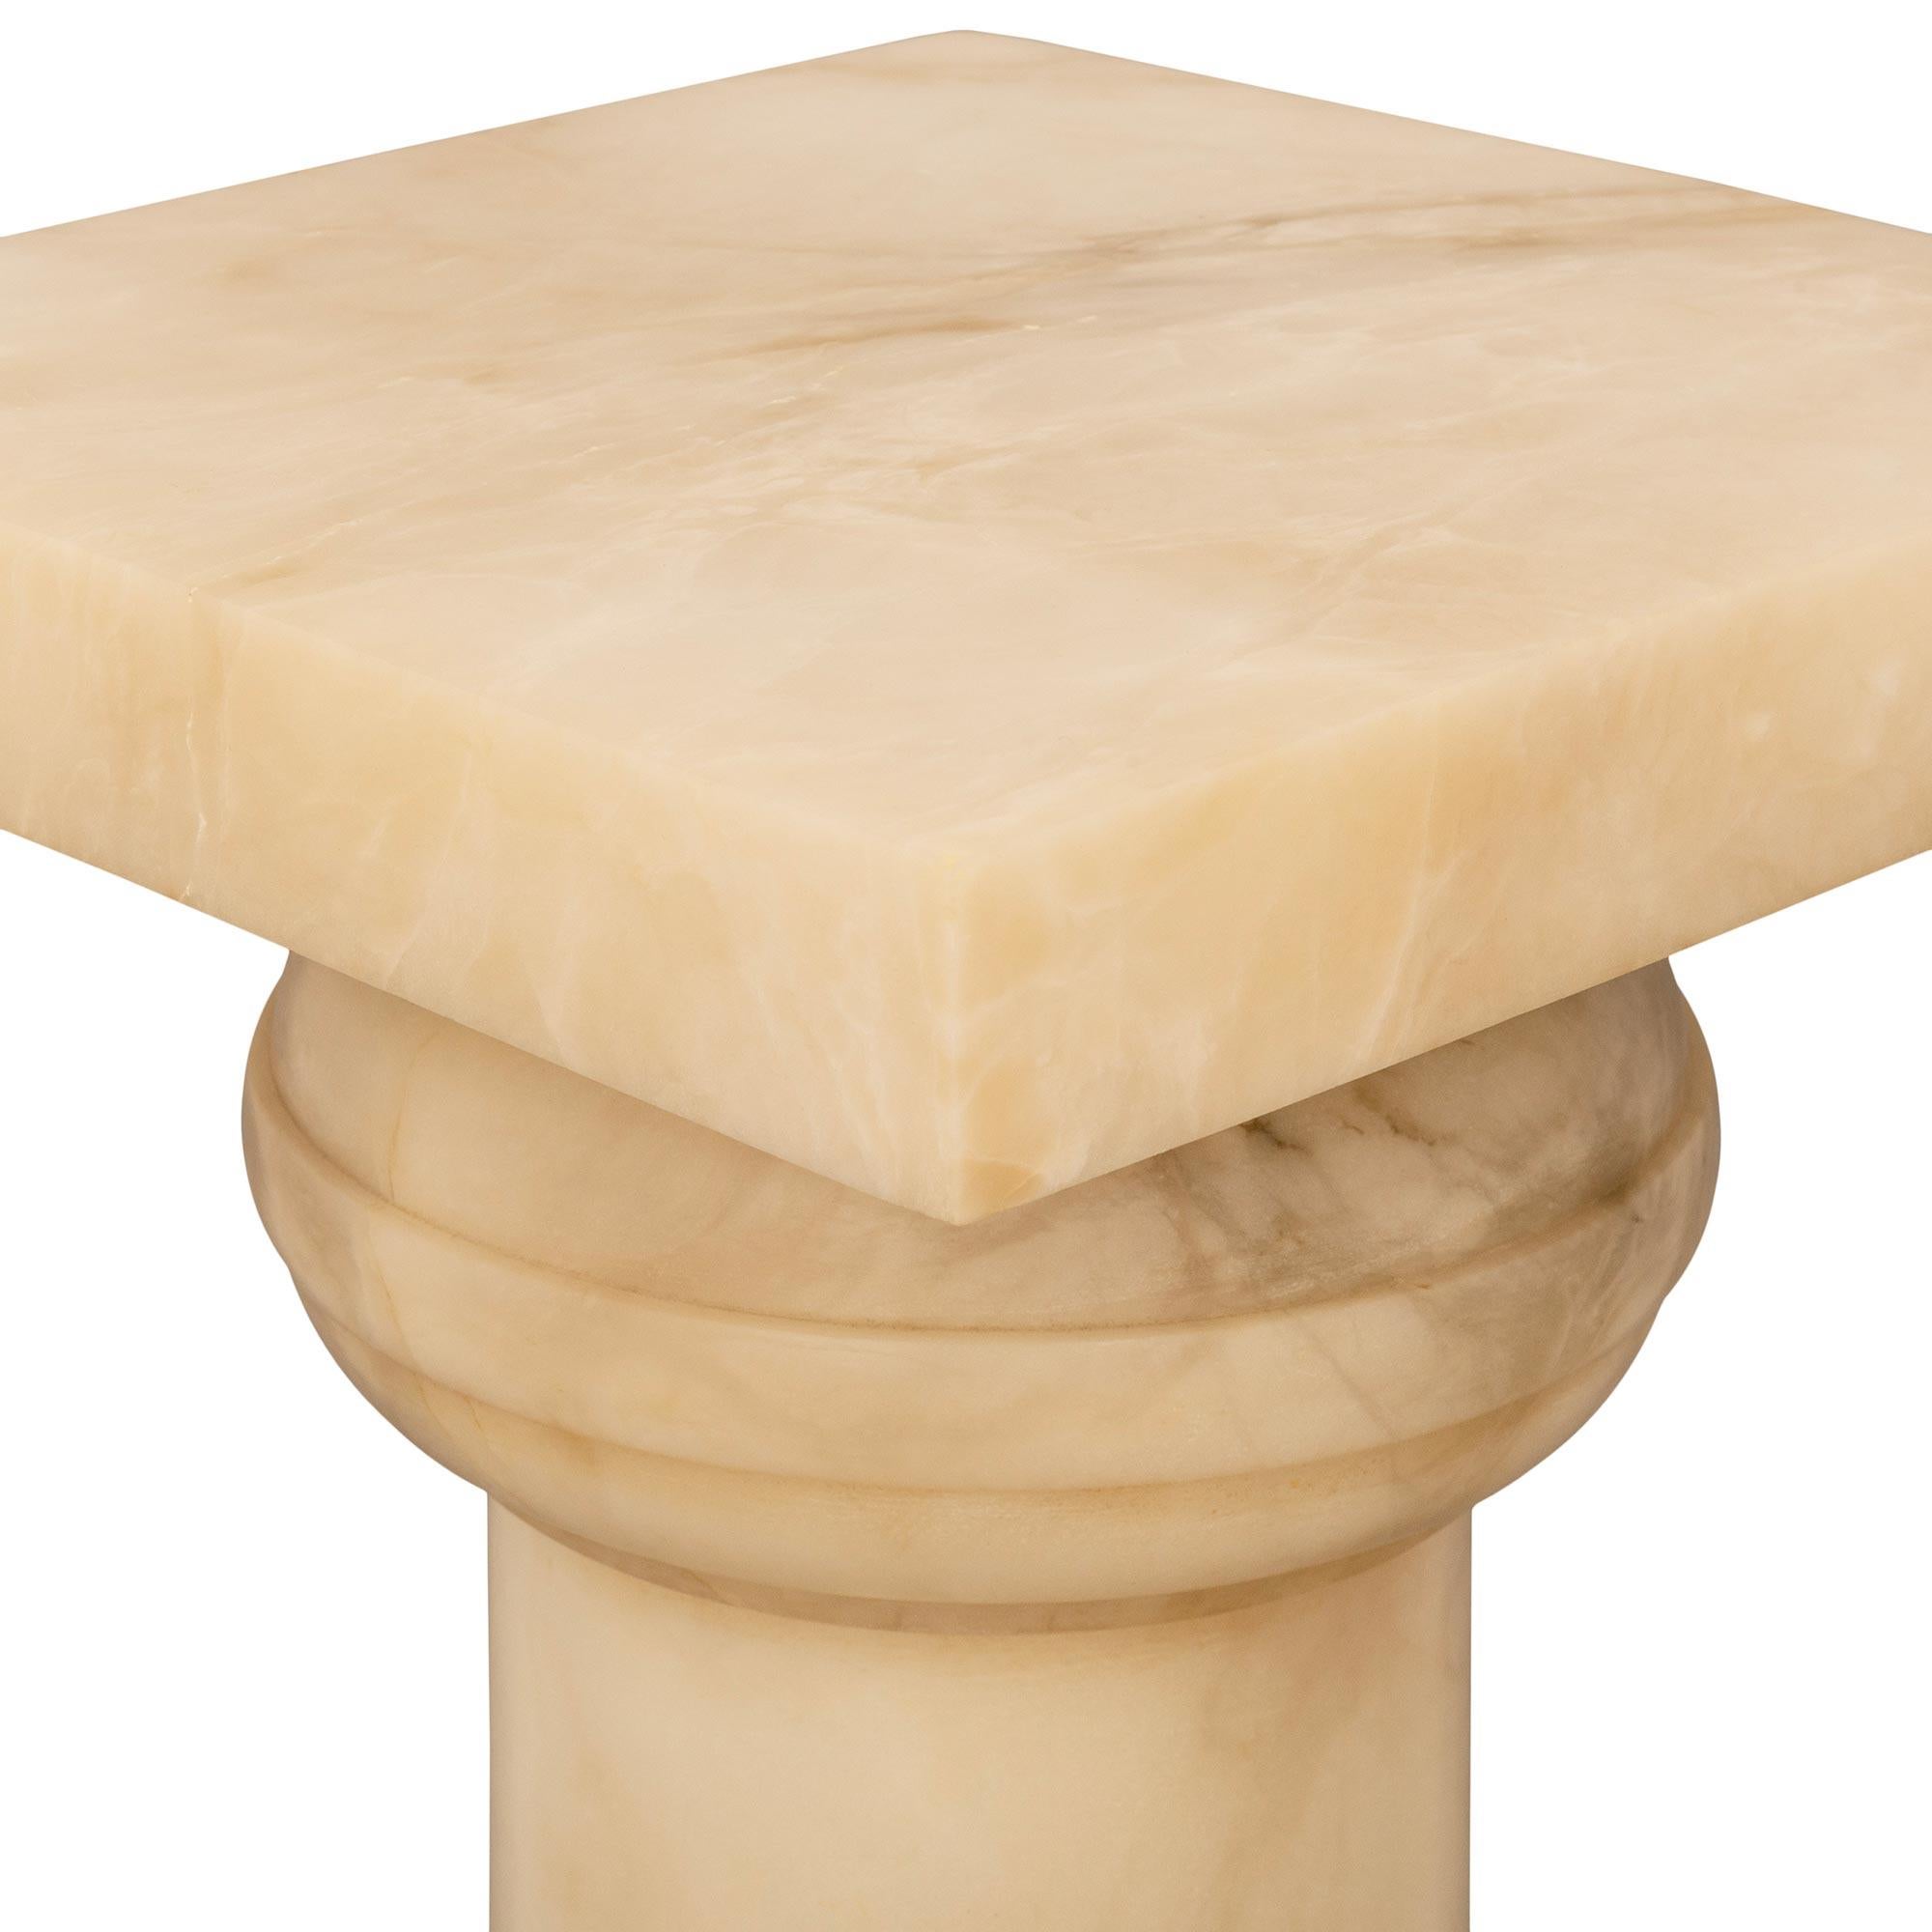 Marble Italian 19th Century Cream Colored Alabaster Pedestal For Sale